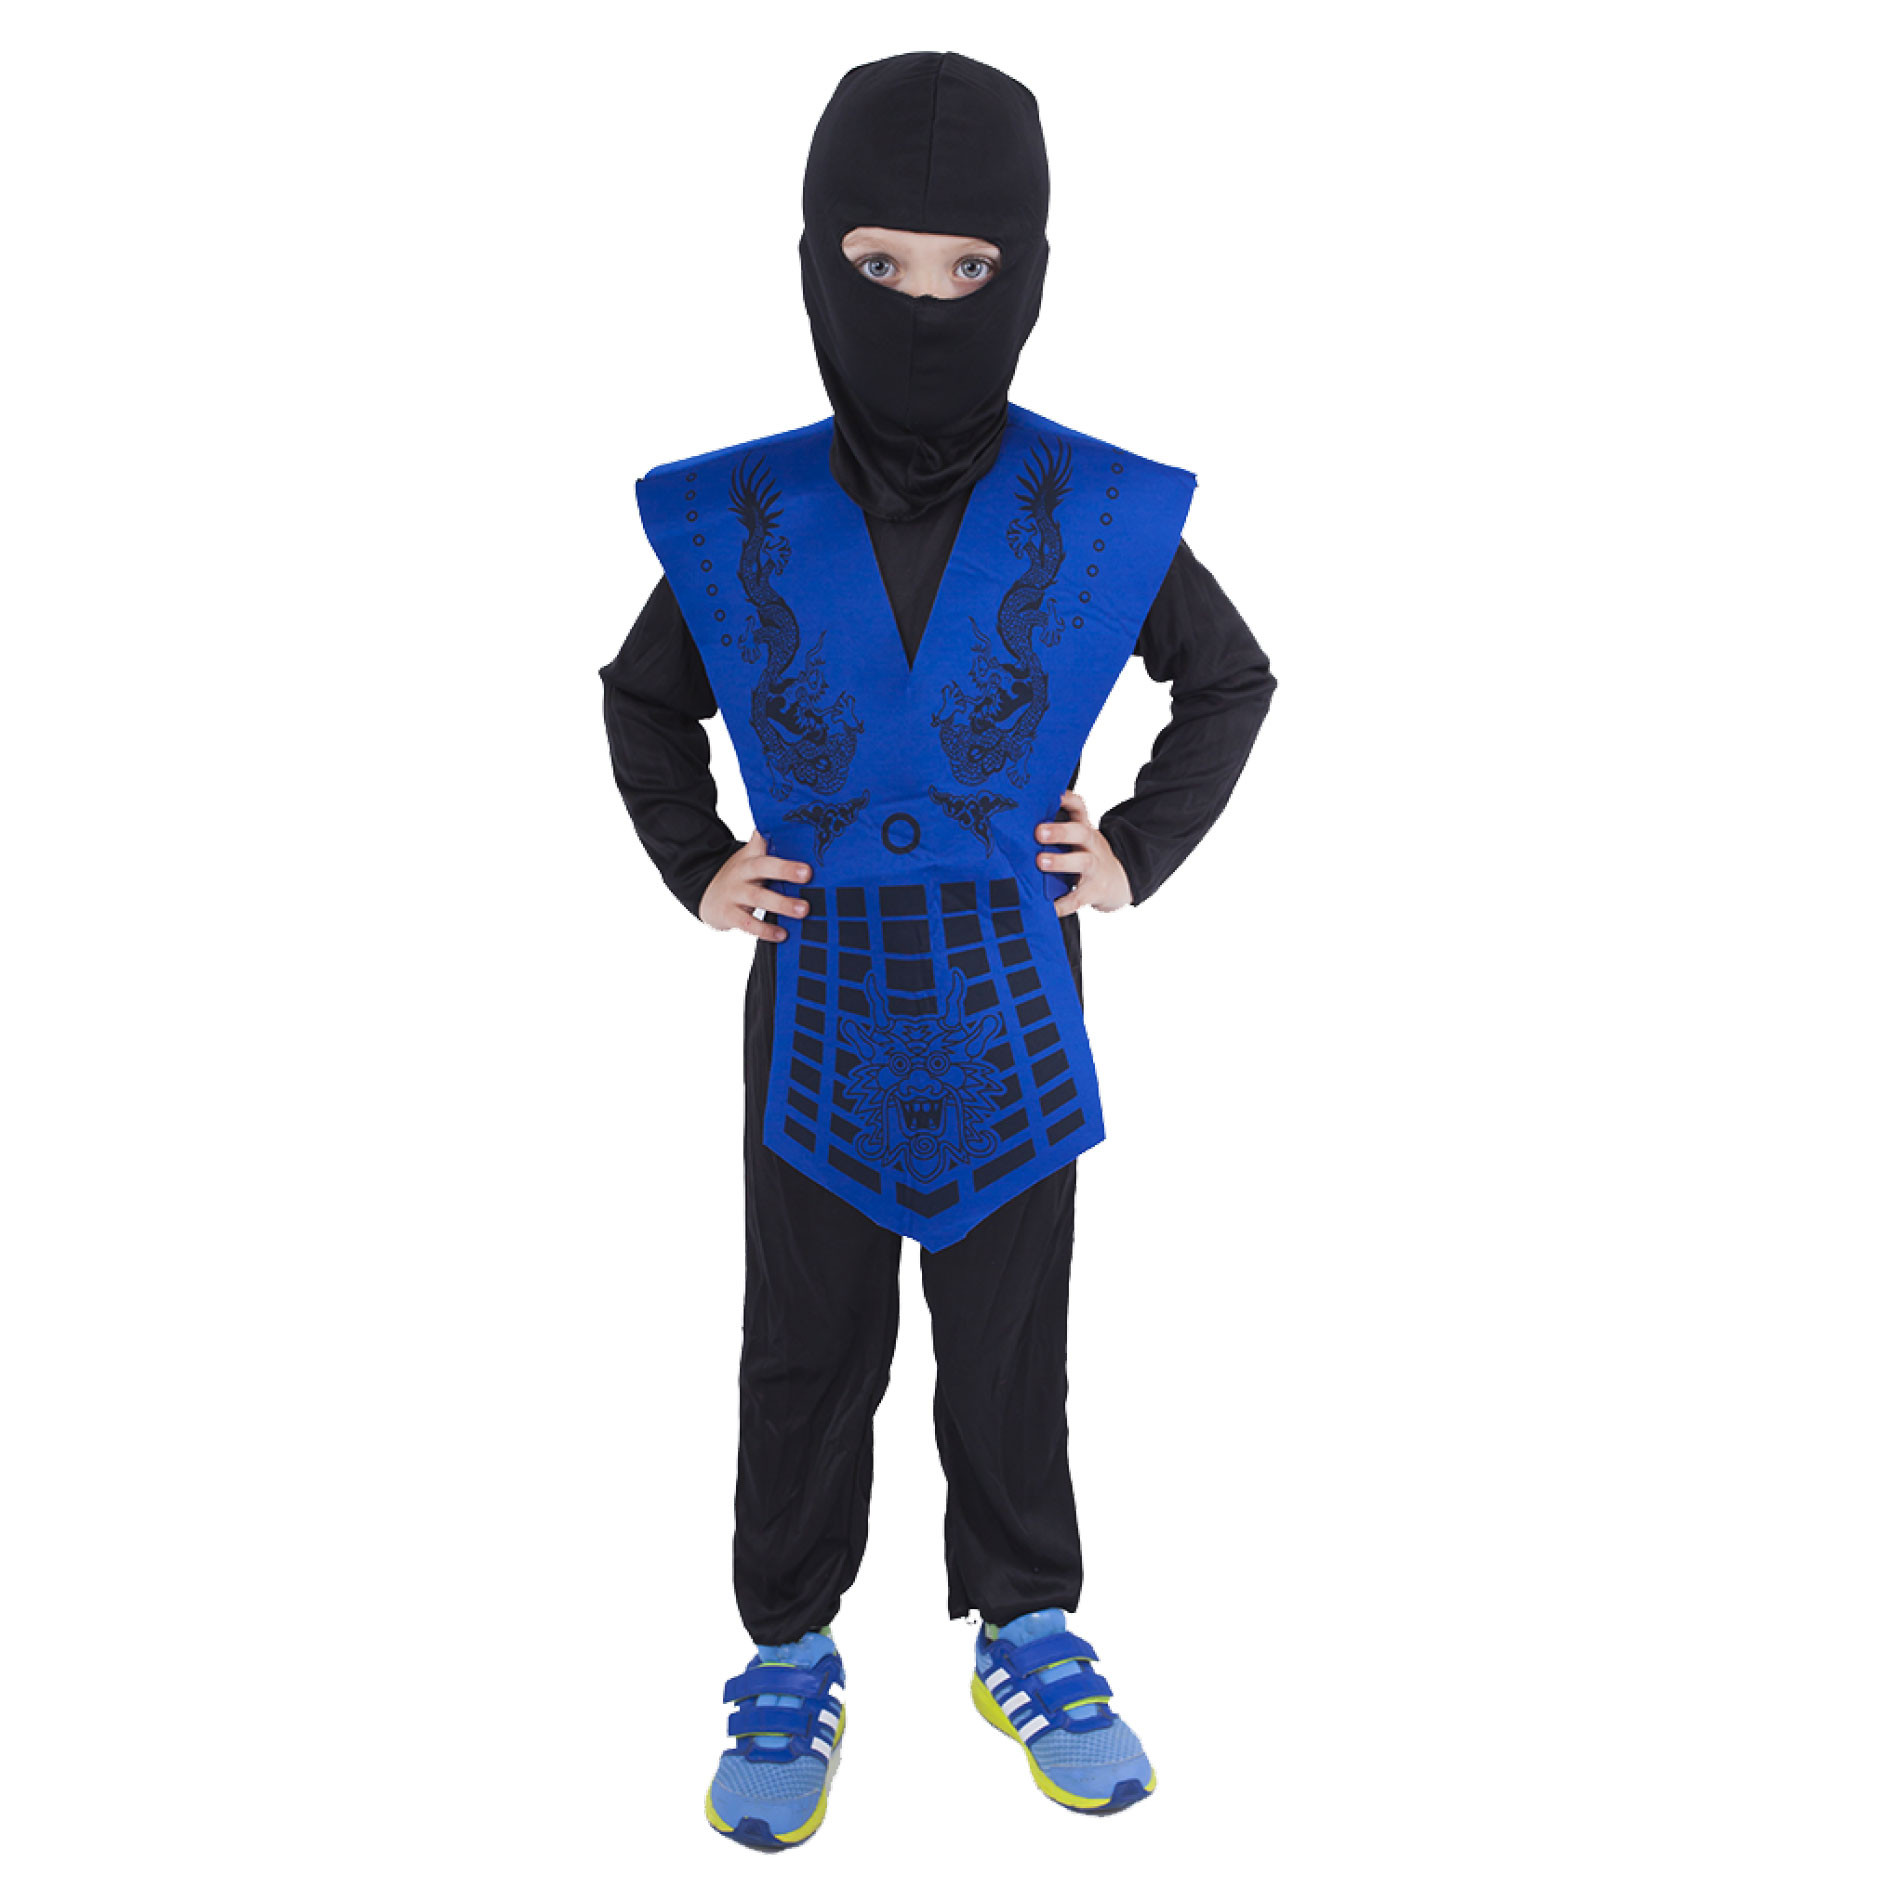 Children costume - blue ninja (M)